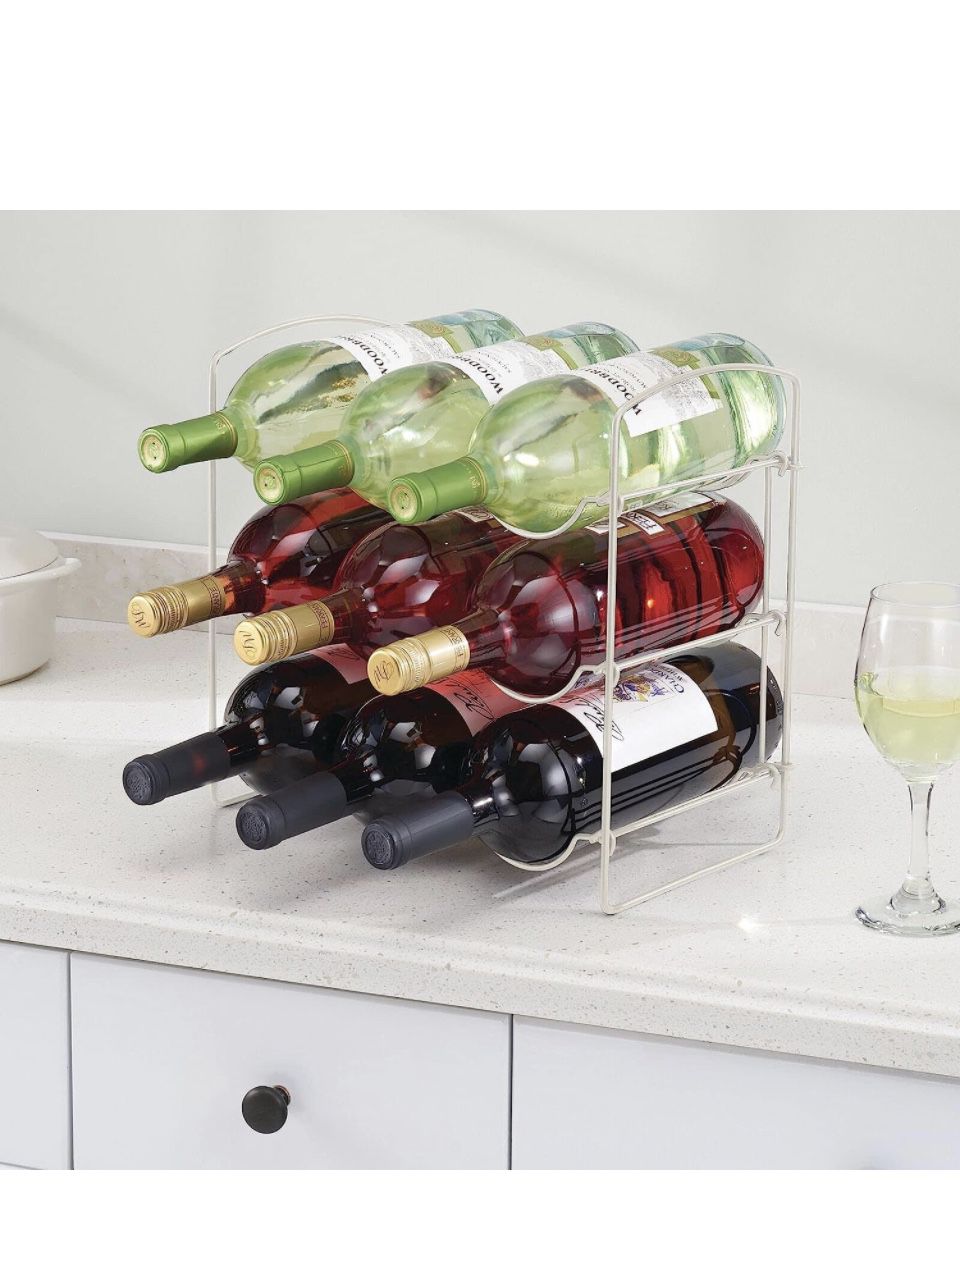 New mDesign Metal Wire Free-Standing Wine Water Bottle Rack - Storage Organizer for Kitchen Countertops, Gift 